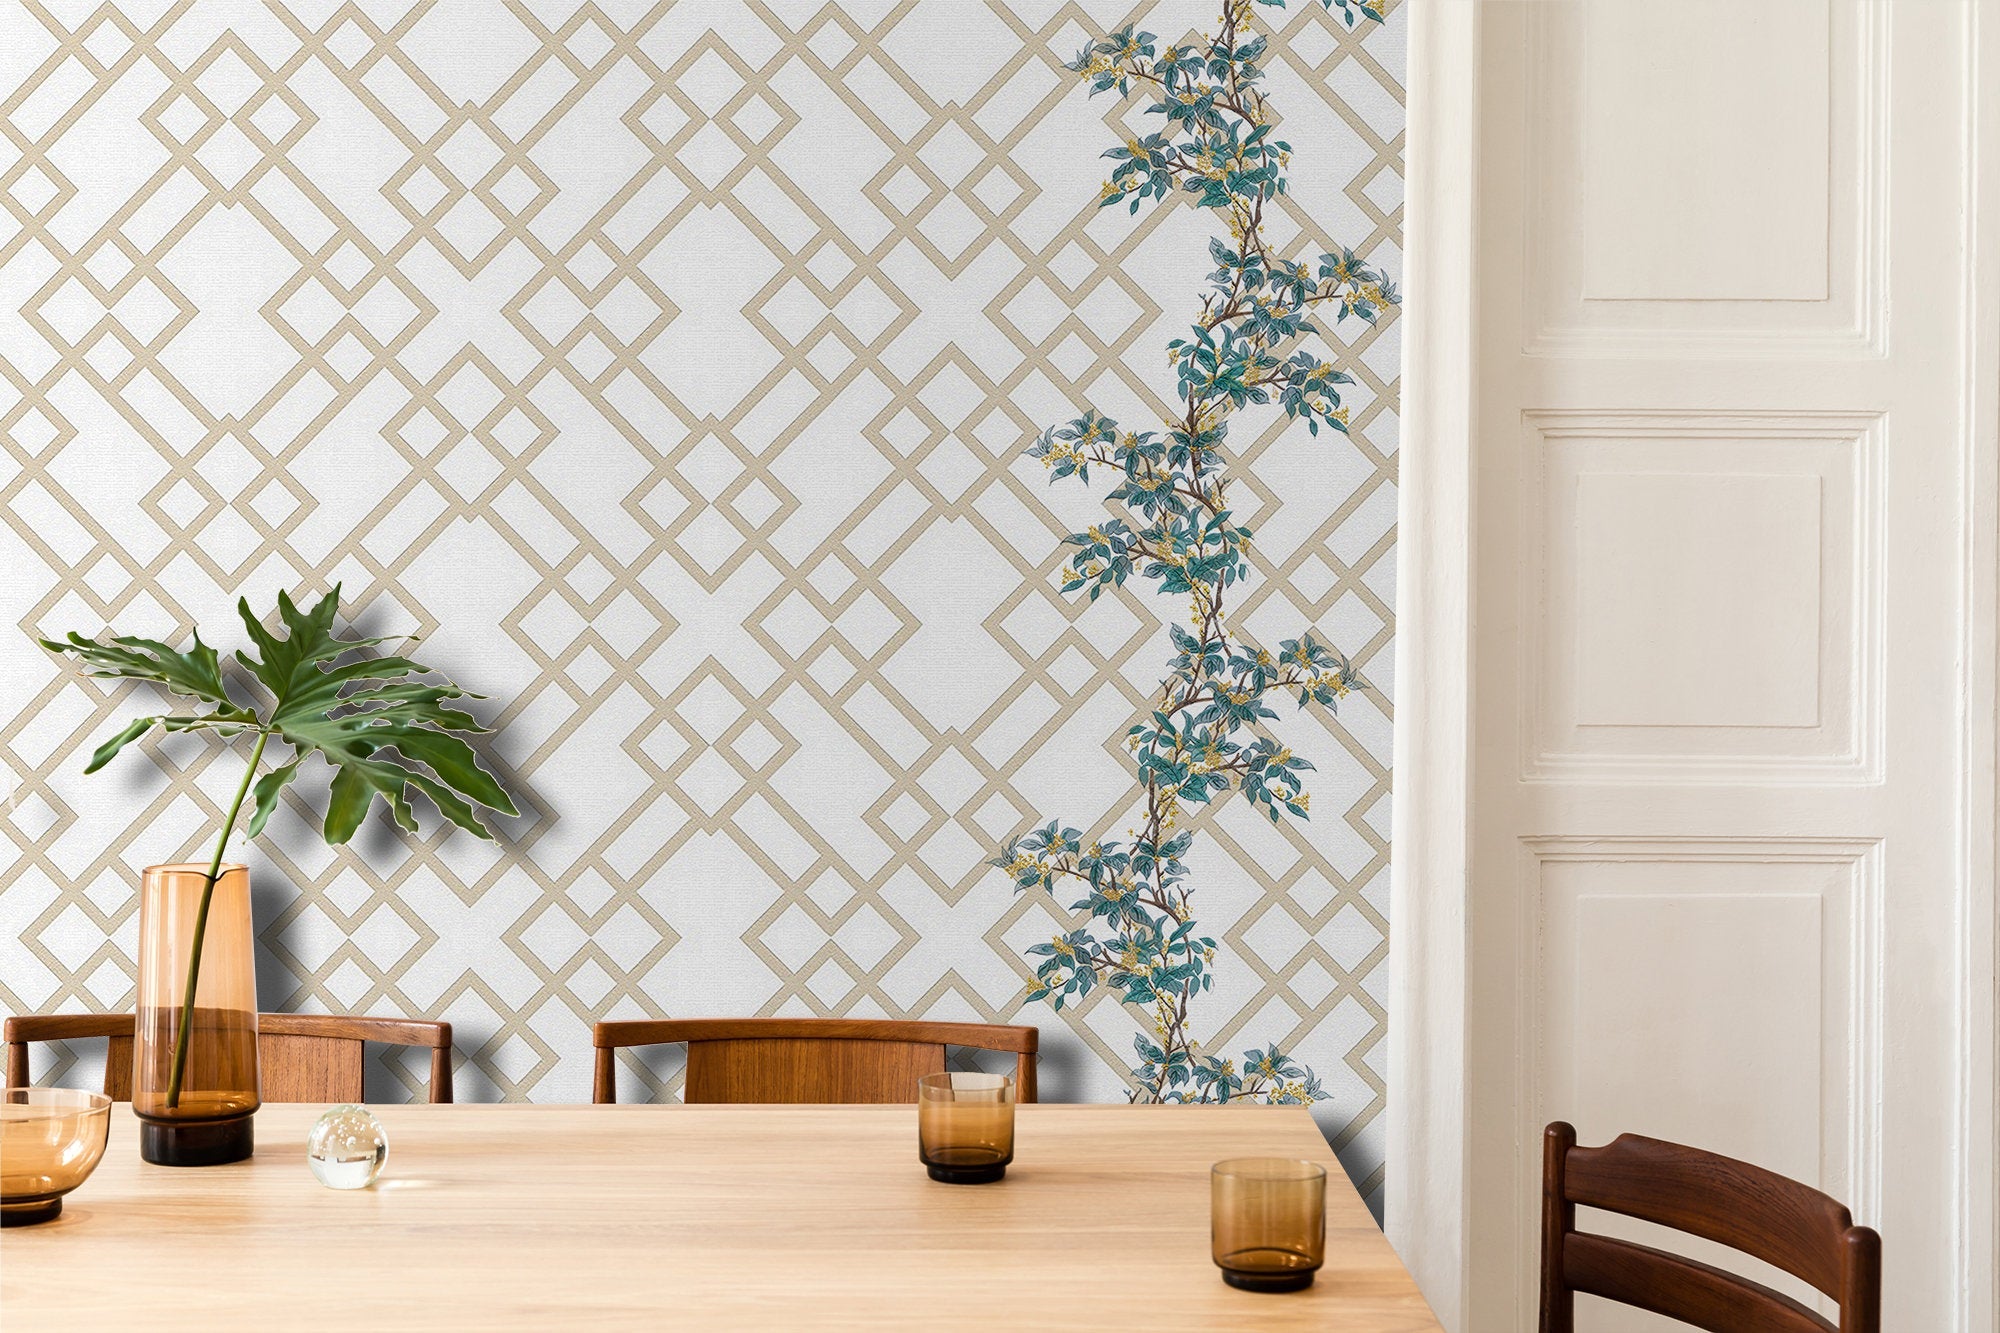 Squared Geometric Shapes Ivy Plants Wallpaper Mural Art